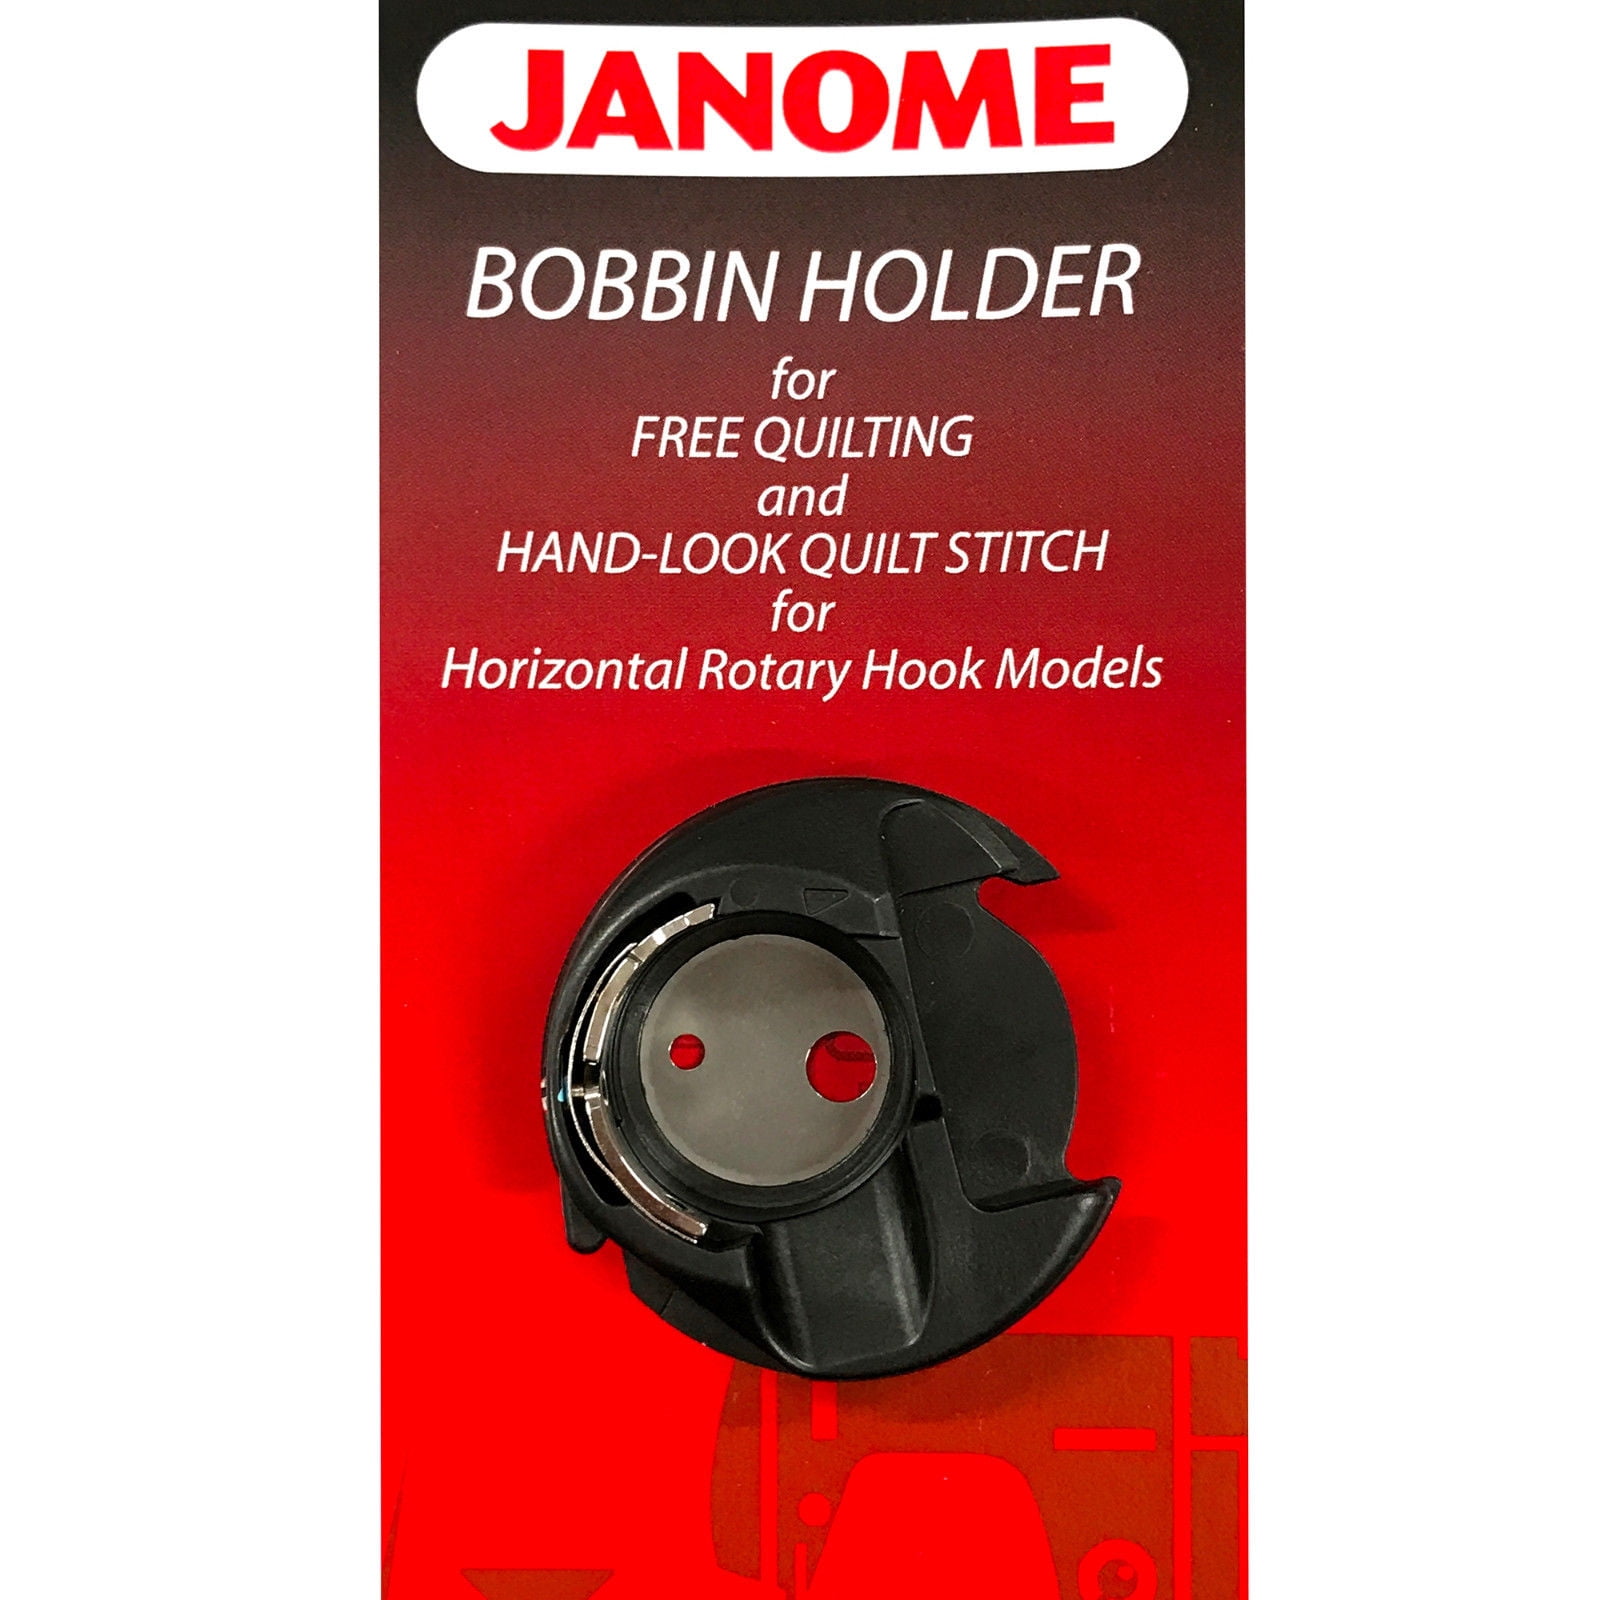 Janome Bobbin Holder #202006008 for Horizontal Rotary Hook